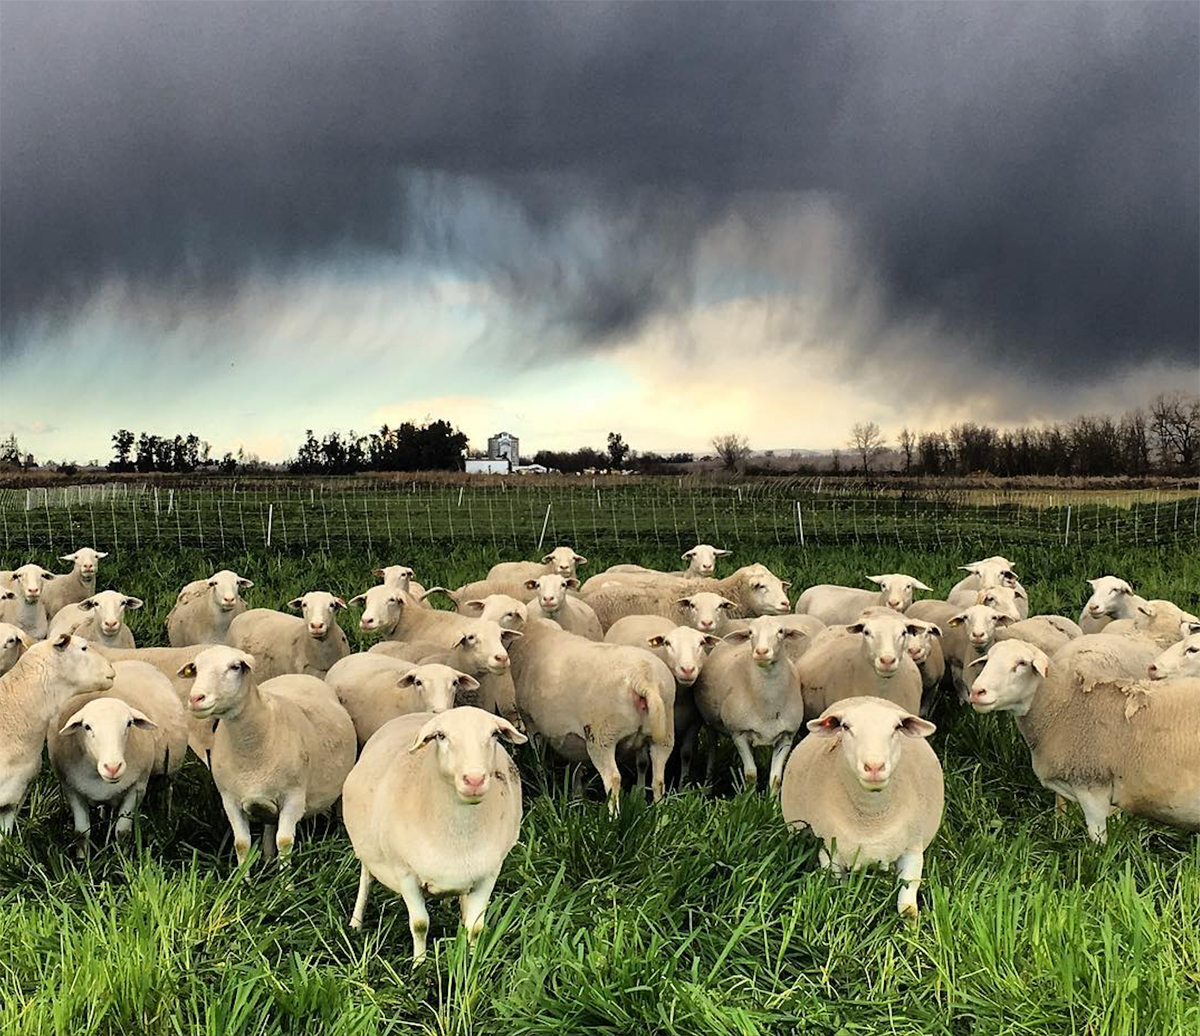 Sheep before an approaching storm.